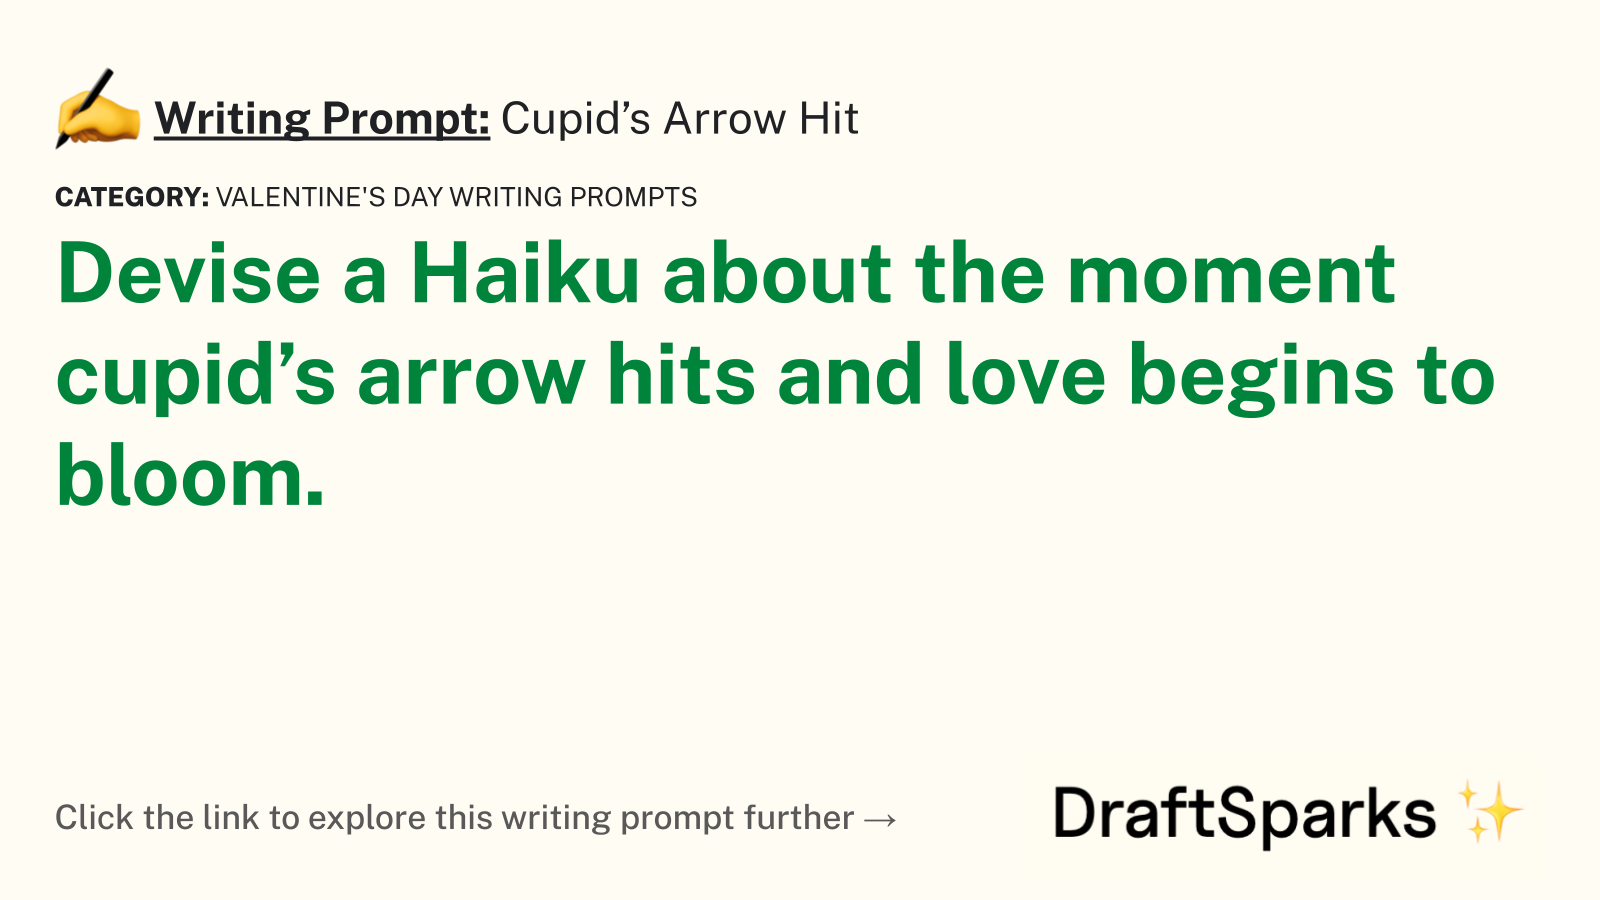 Cupid’s Arrow Hit